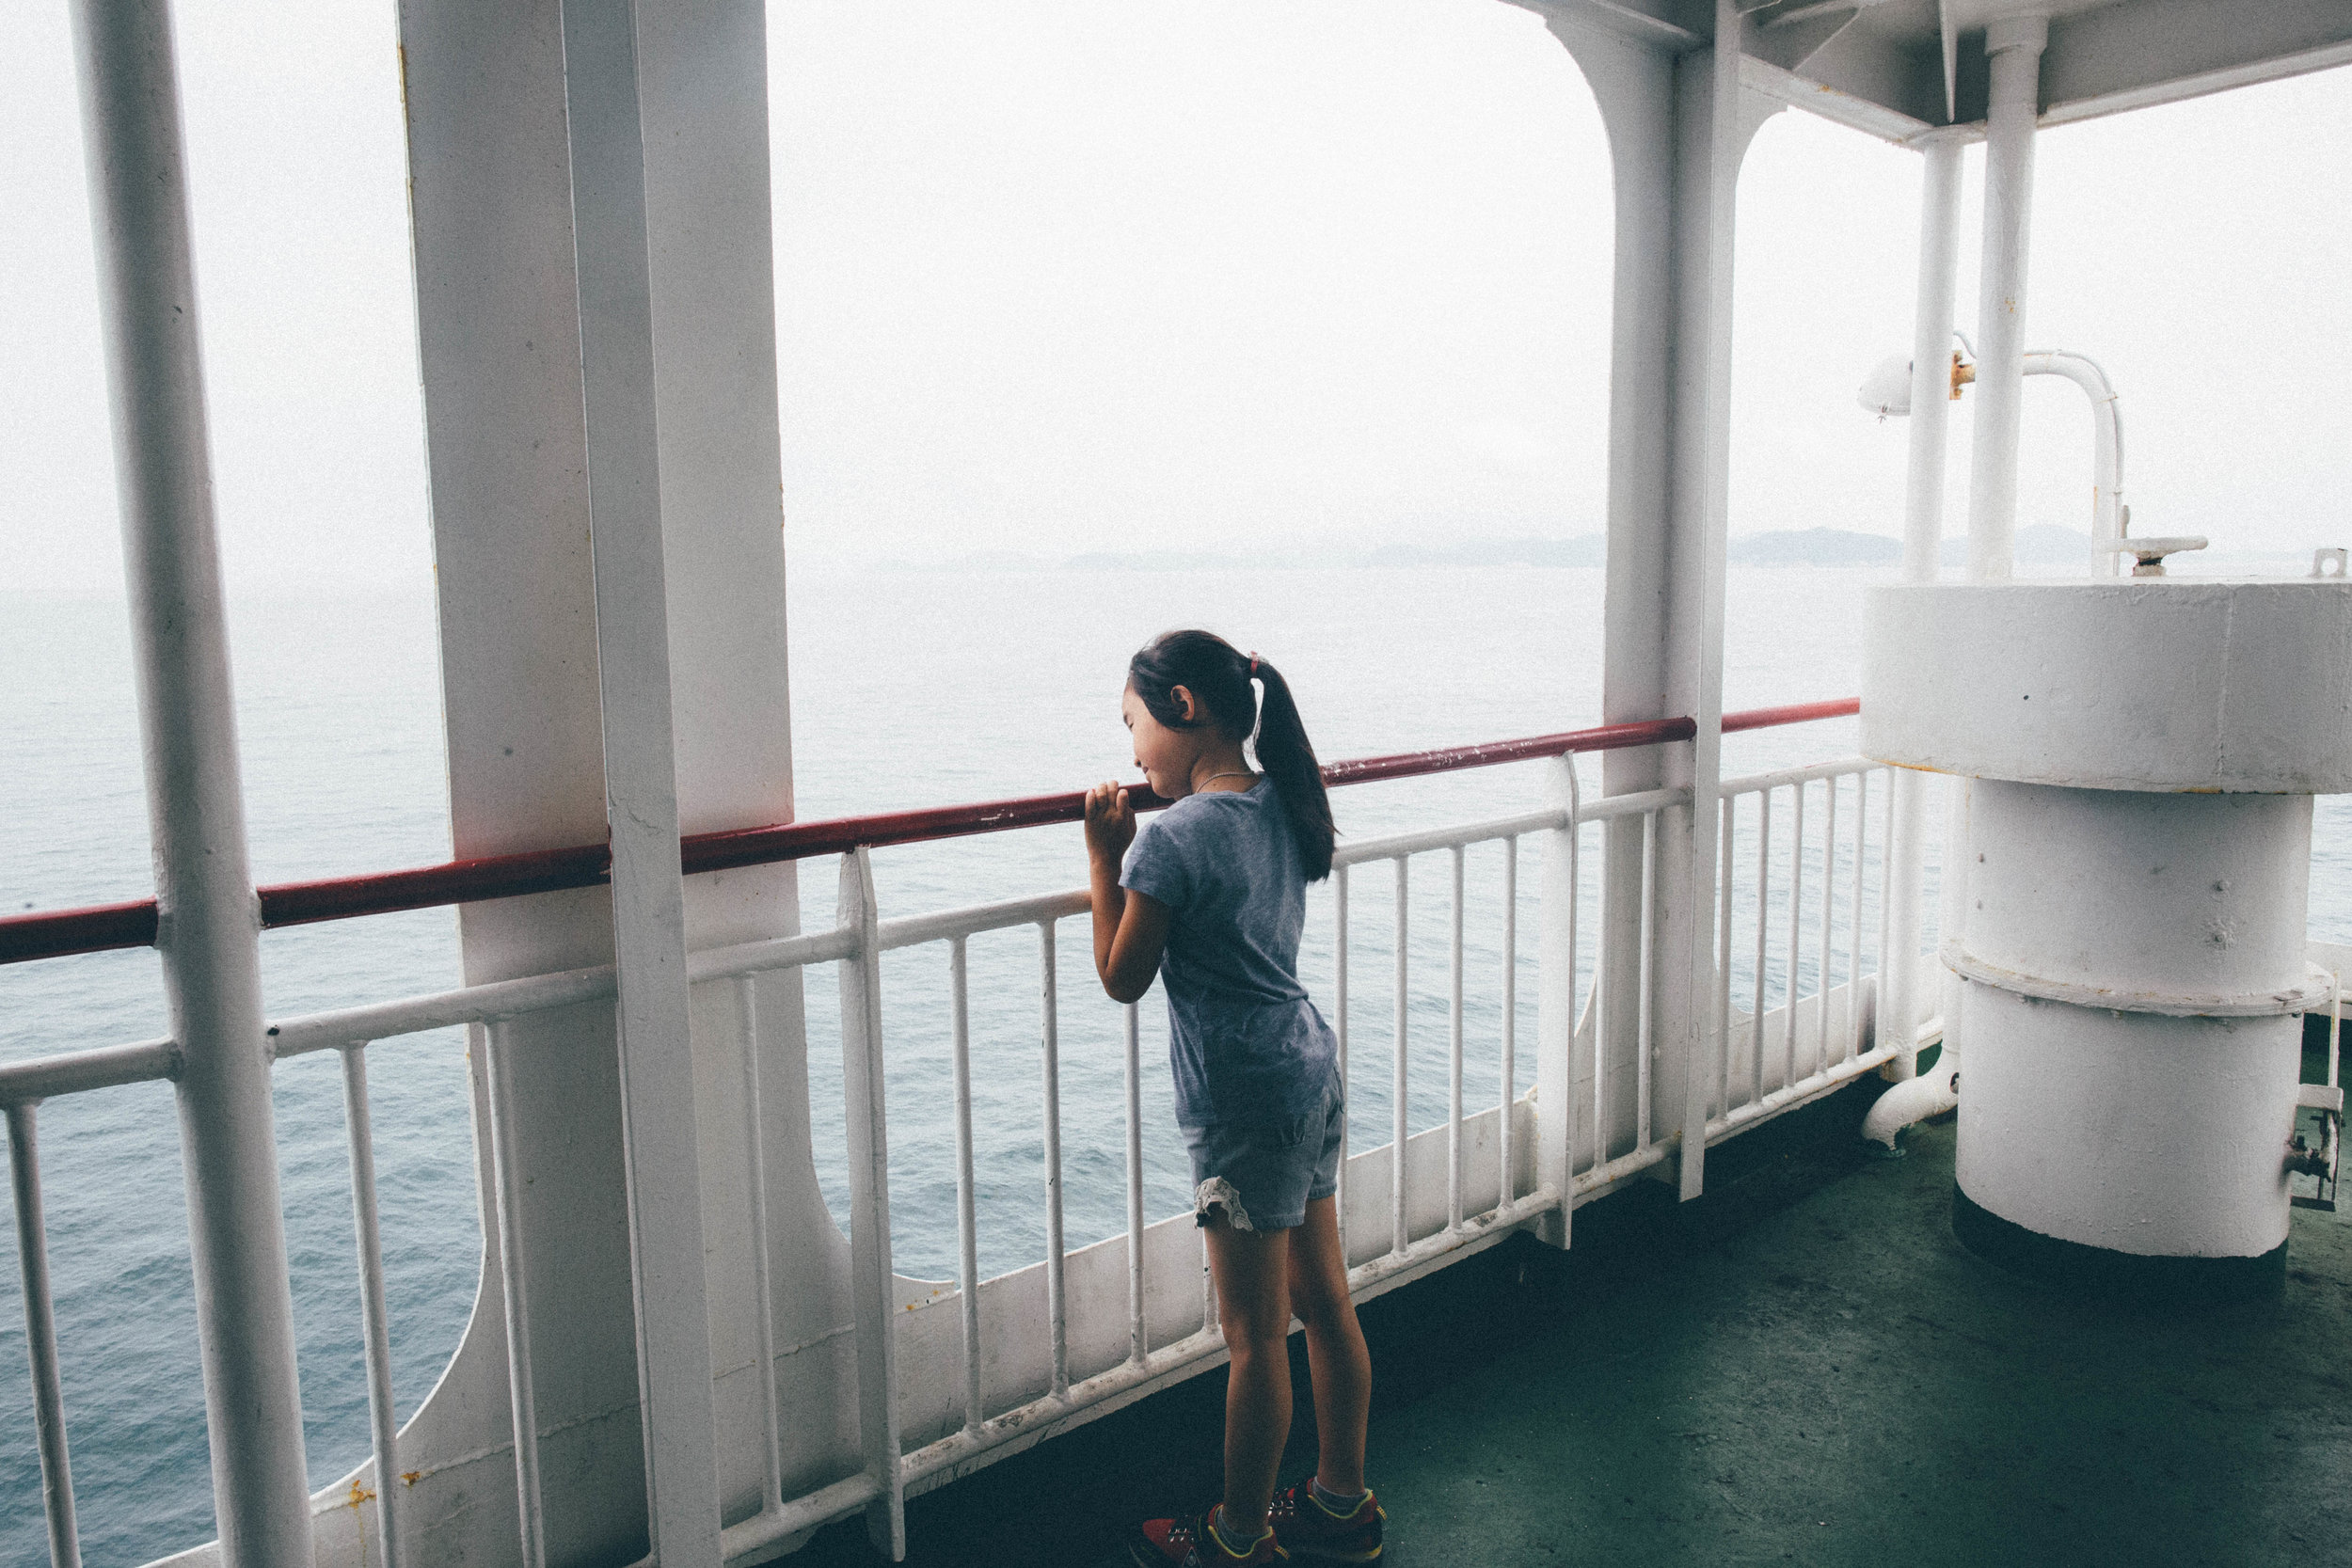   A young girl rides the Hanil Express Ferry to Jeju Island. Jeju-do, South Korea.&nbsp;  